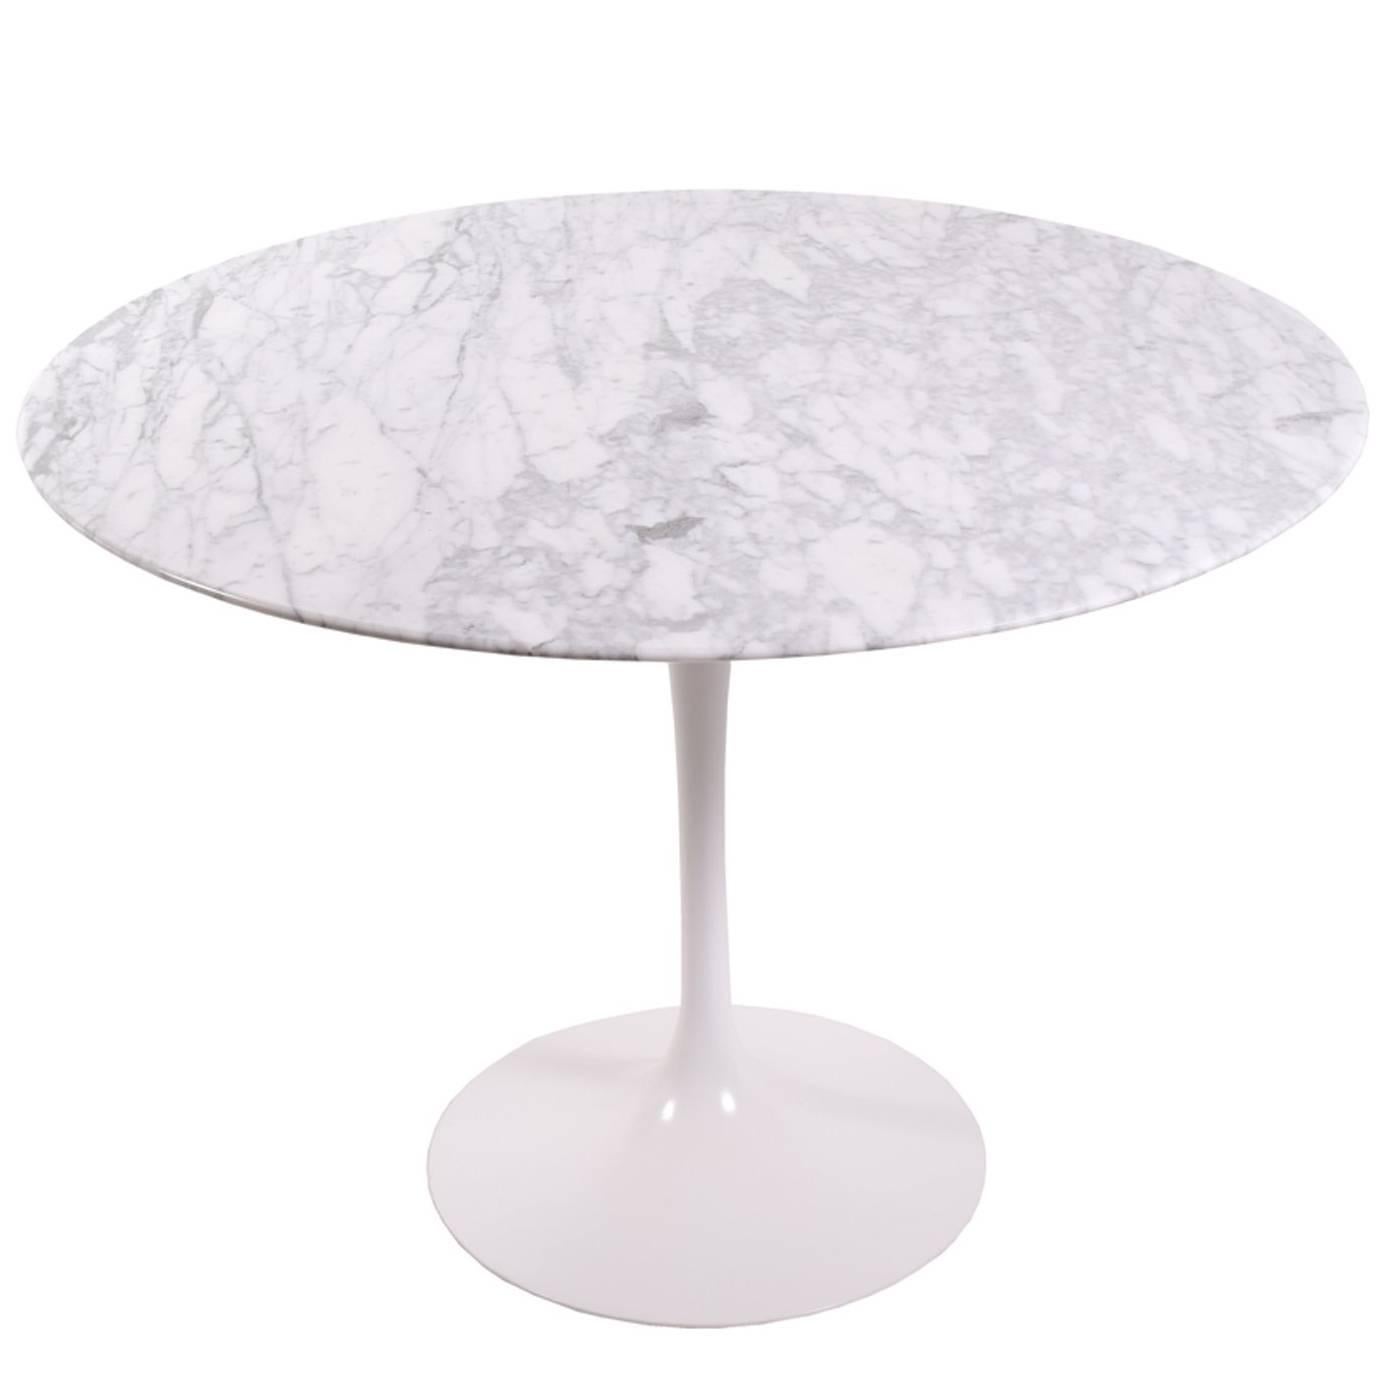 White Italian Marble Eero Saarinen Table Designed for Knoll